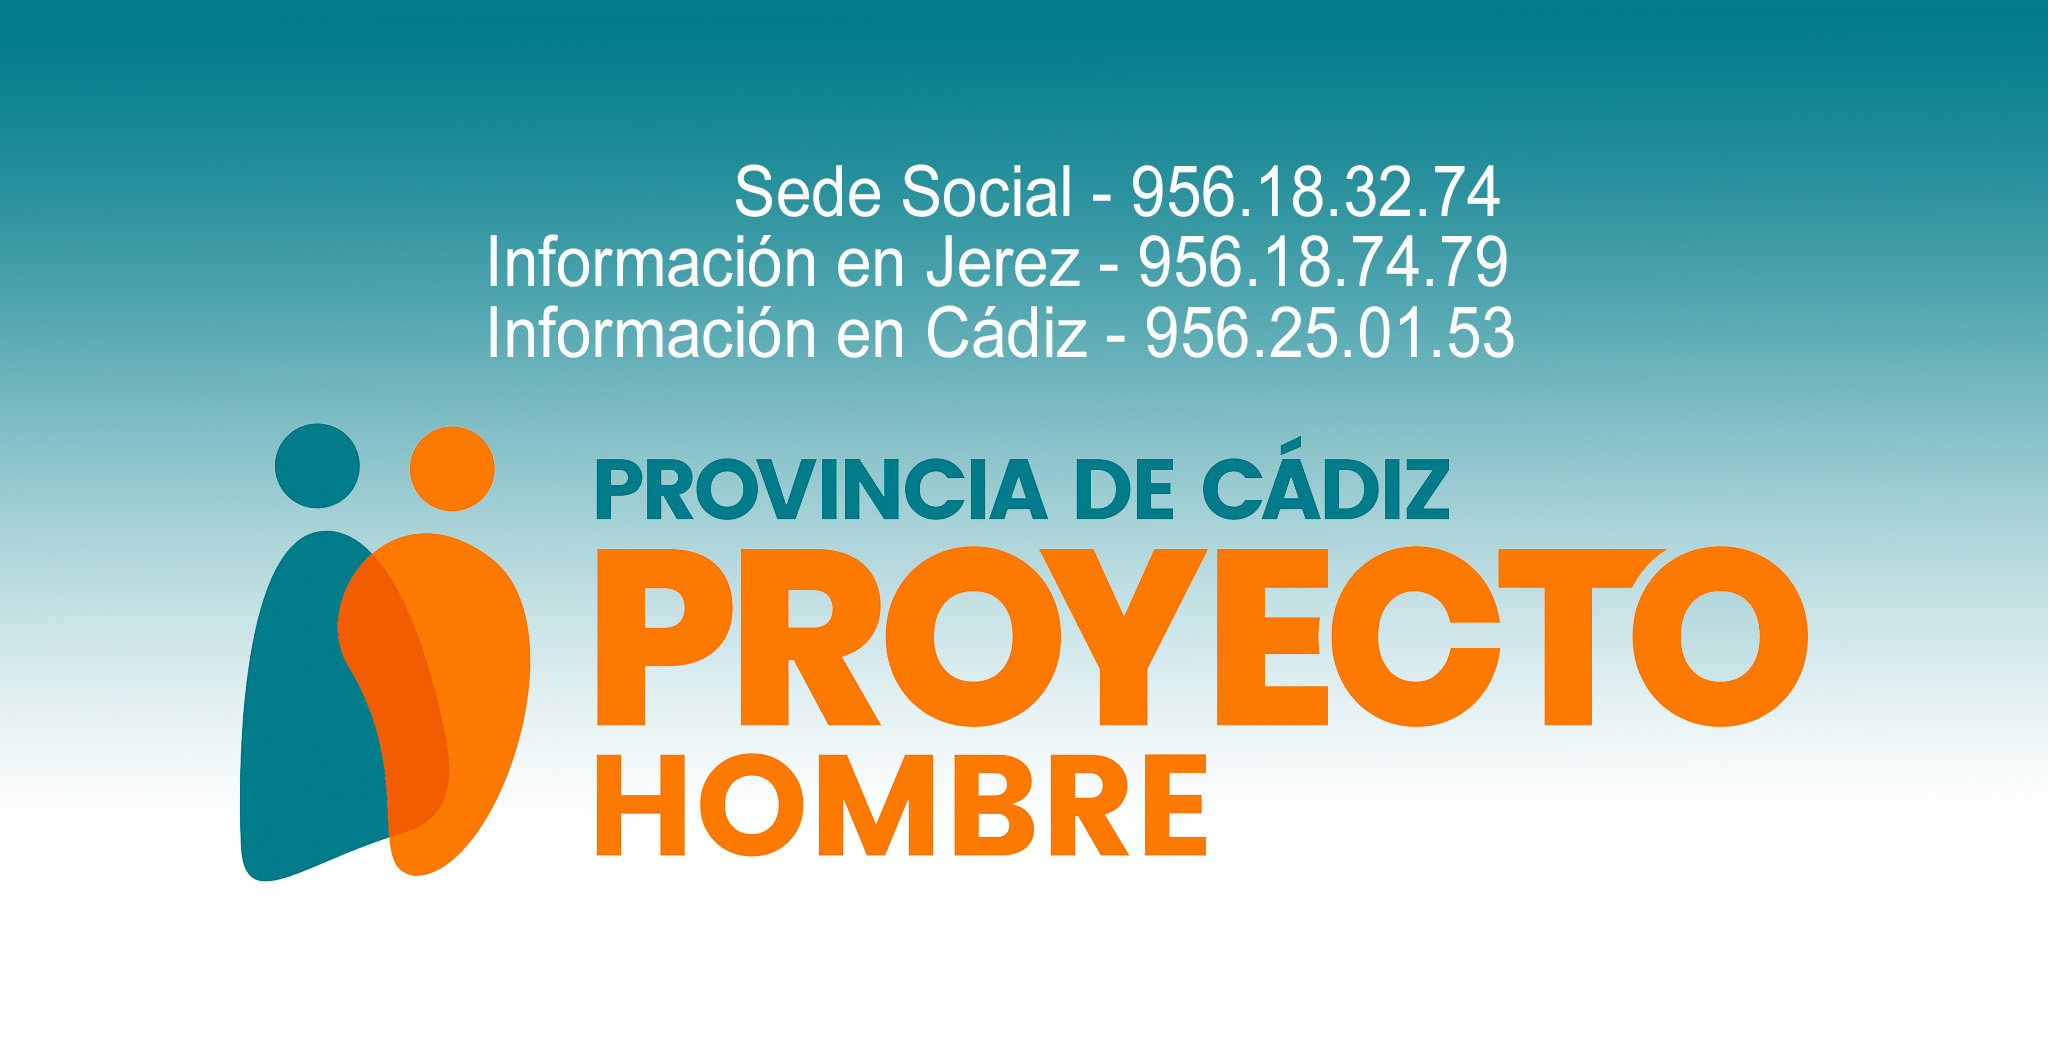 Proyecto Hombre Provincia de Cádiz